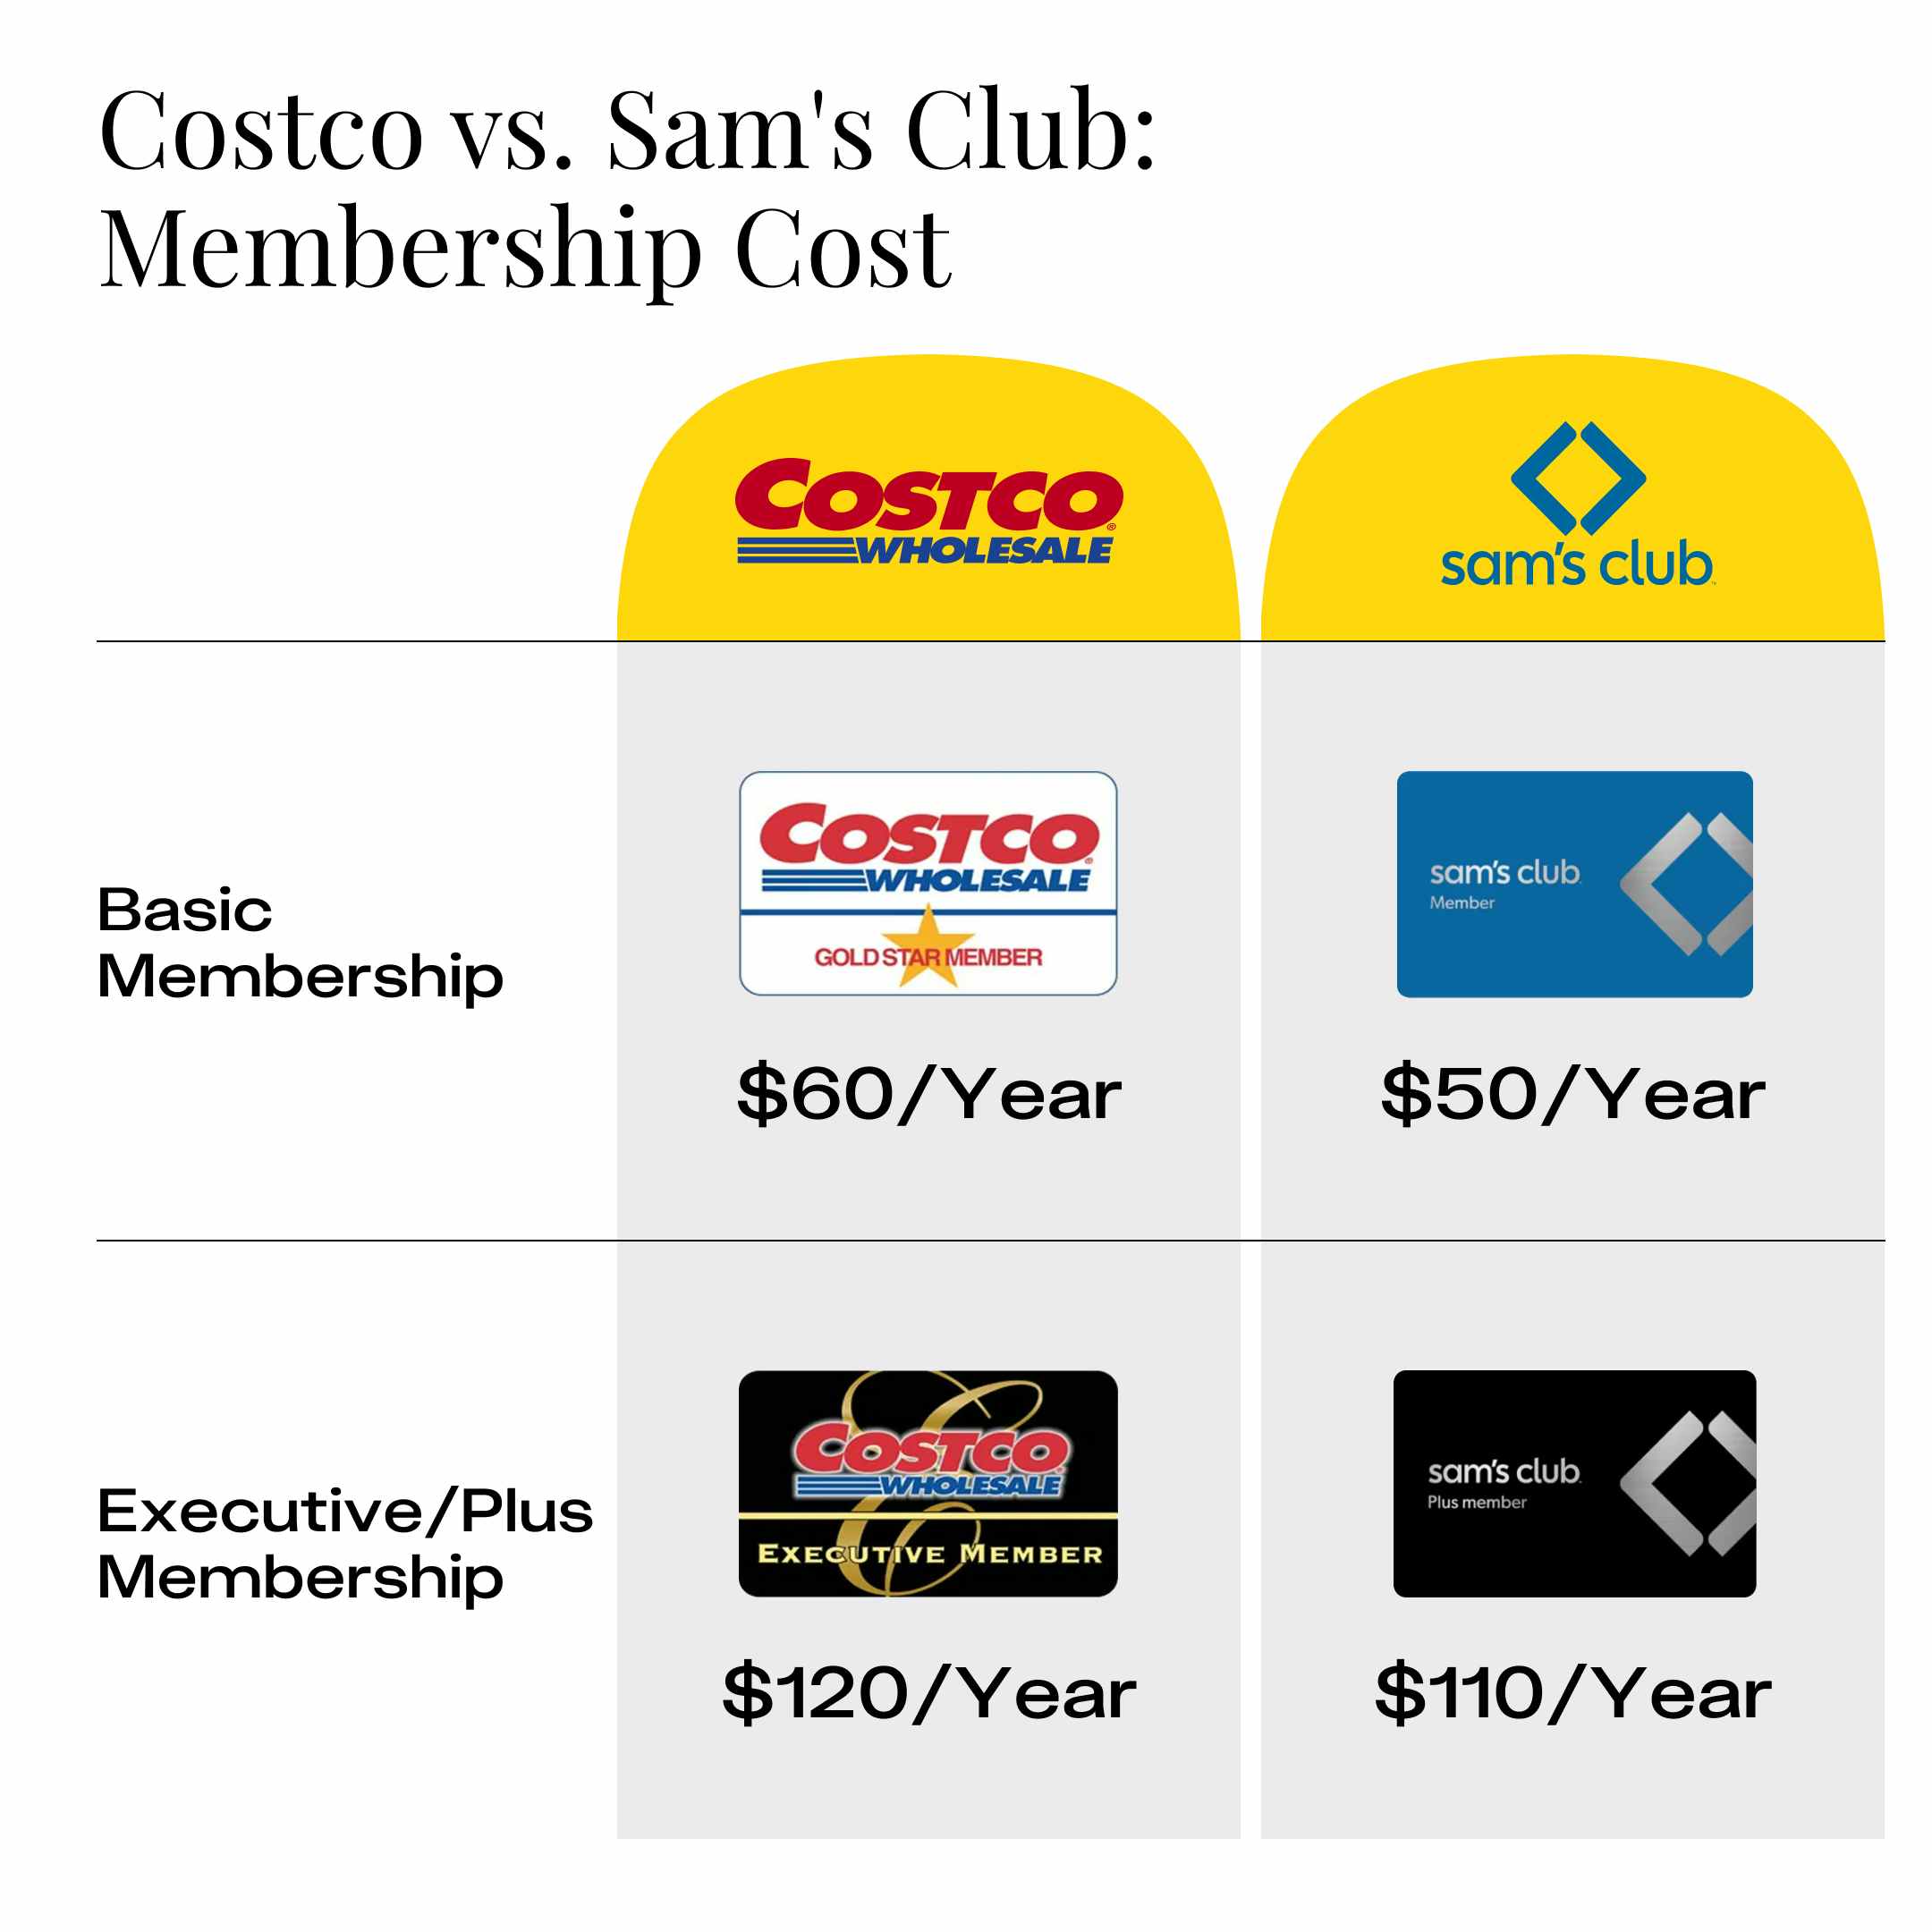 Costco vs. Sam's Club Membership Cost